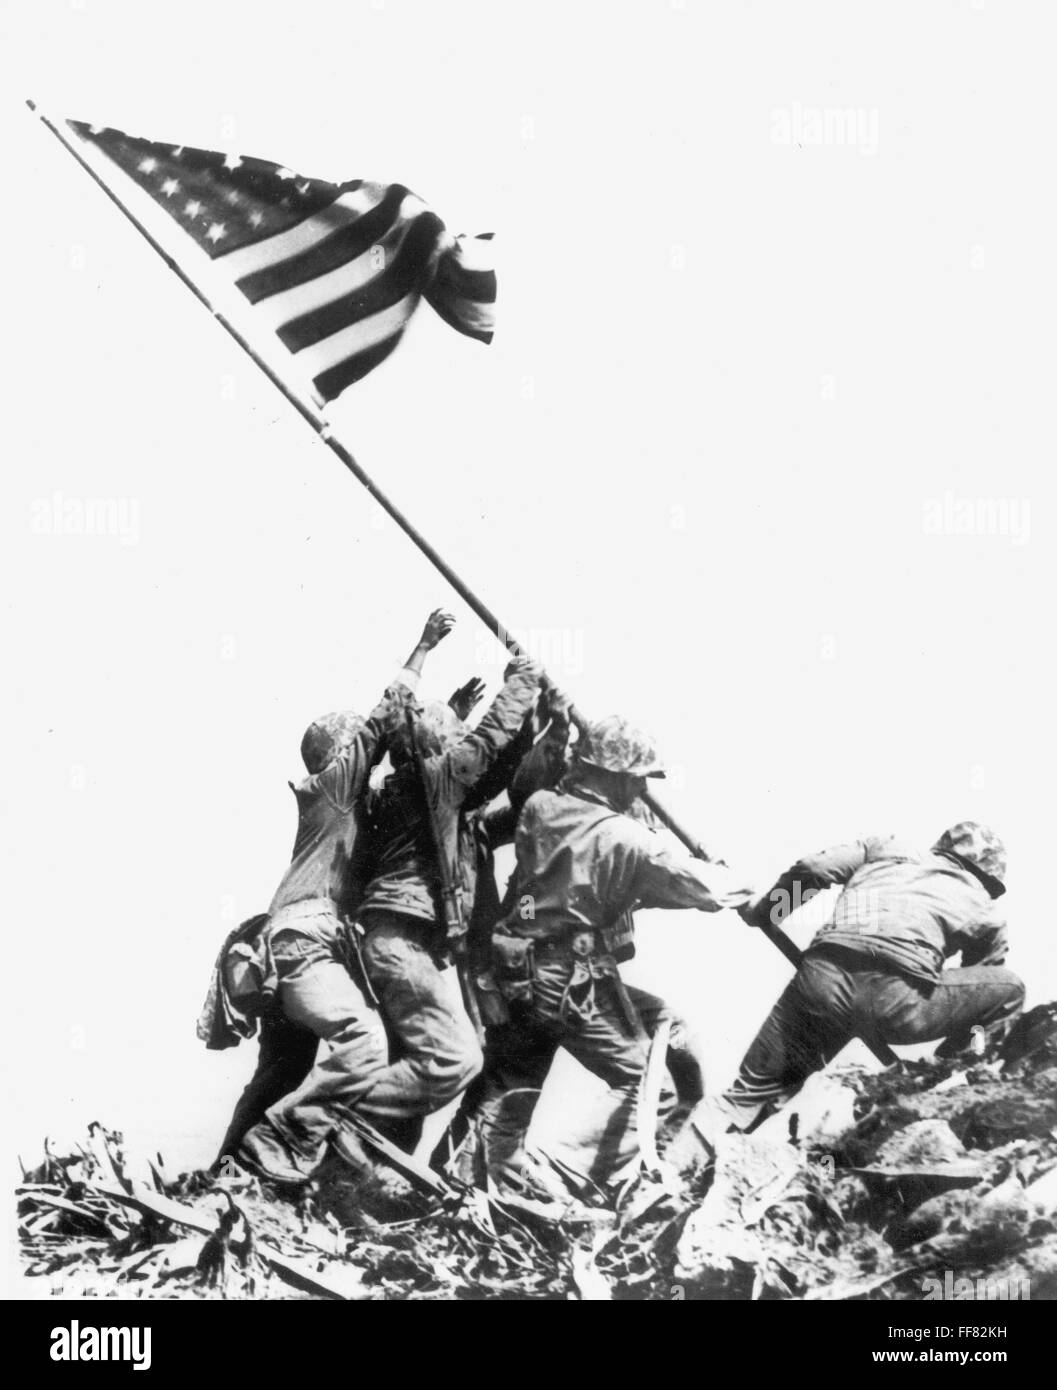 WORLD WAR II: IWO JIMA. /nUnited States Marines raising the flag over Mount Suribachi, Iwo Jima, 23 February 1945. Stock Photo